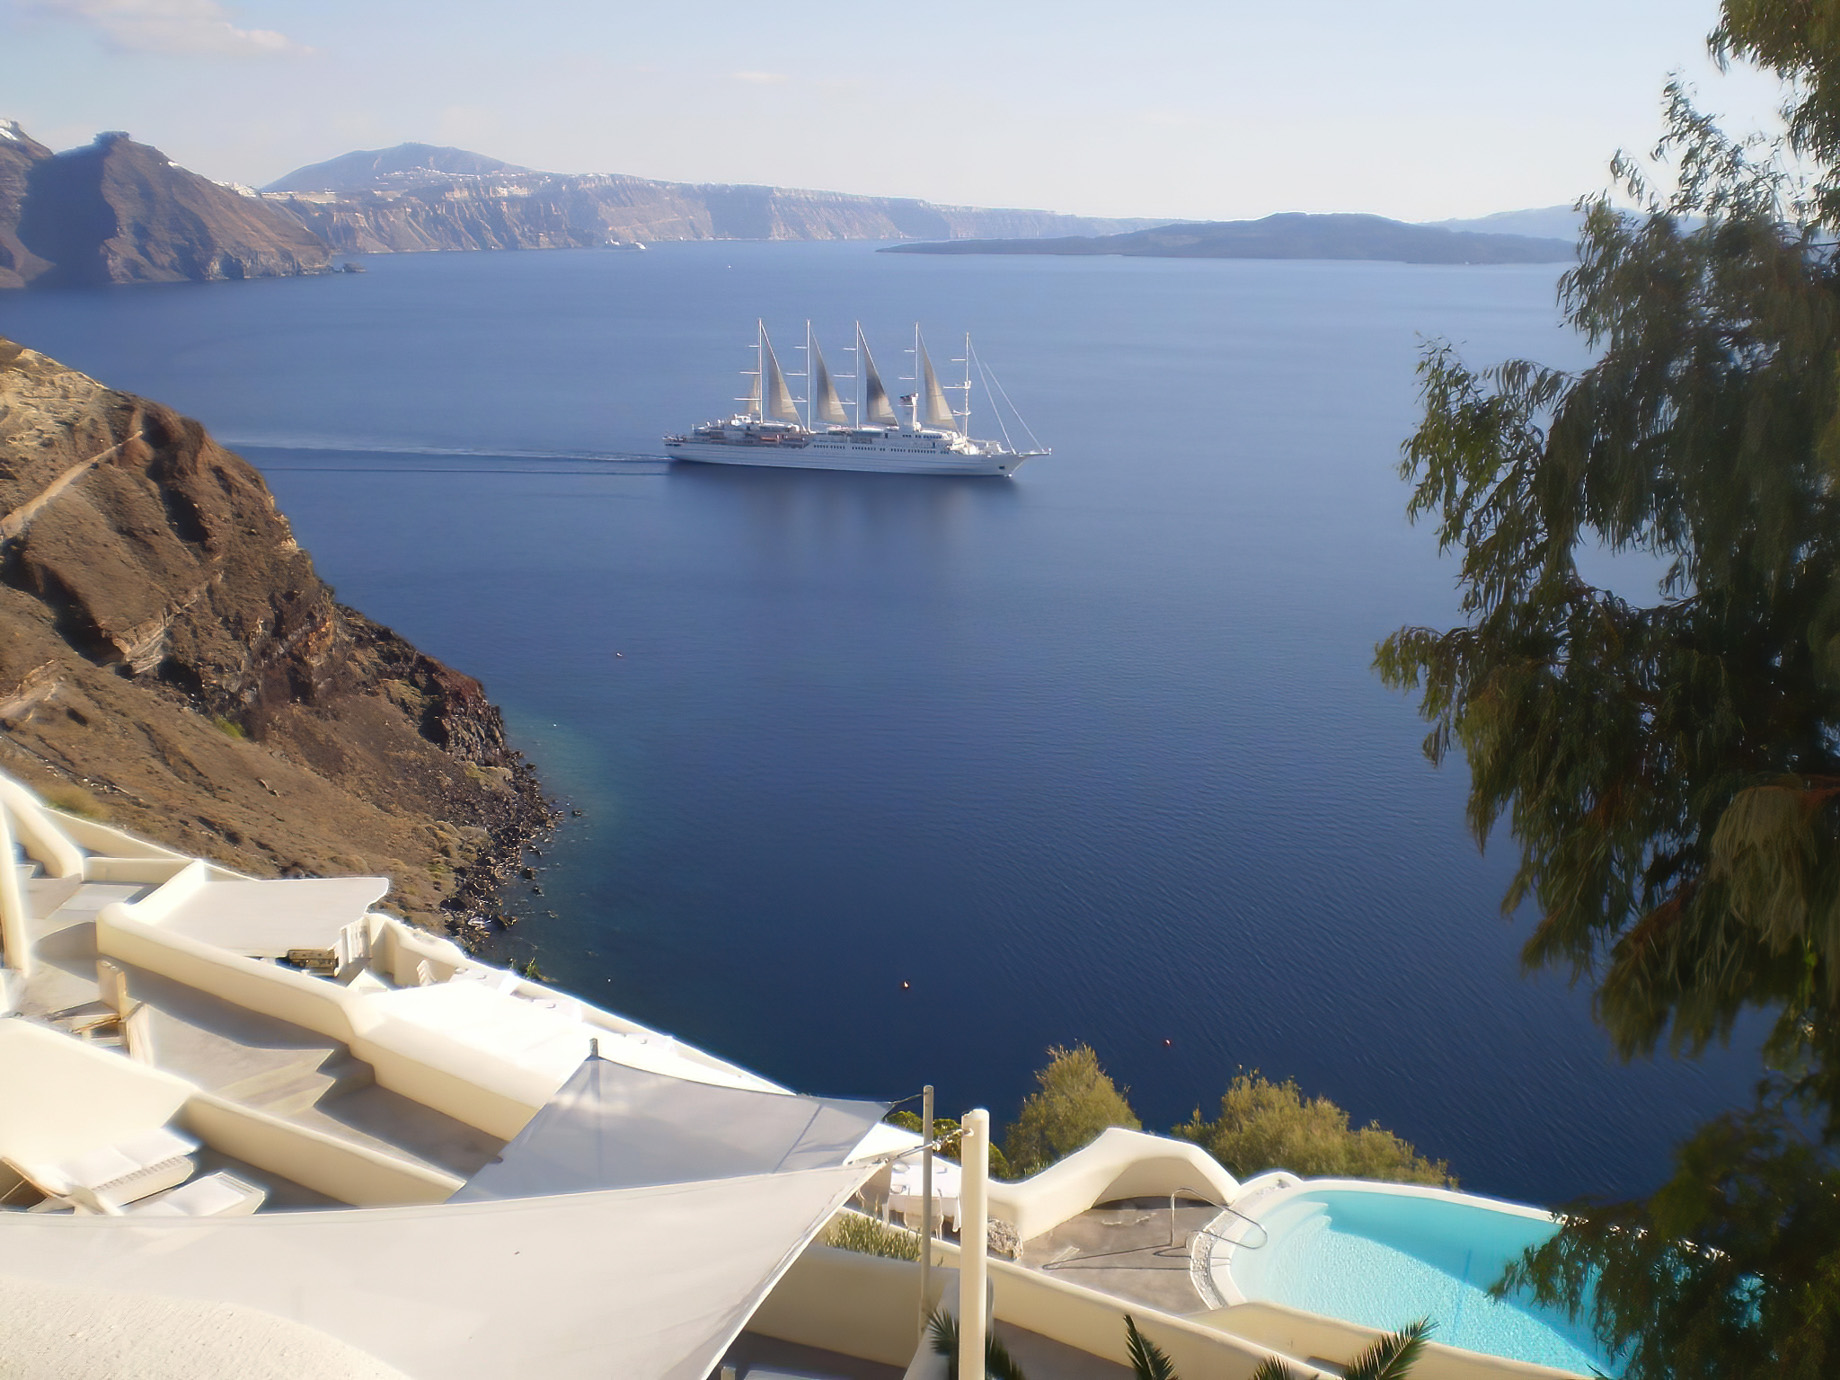 Mystique Hotel Santorini – Oia, Santorini Island, Greece - Clifftop Ocean View